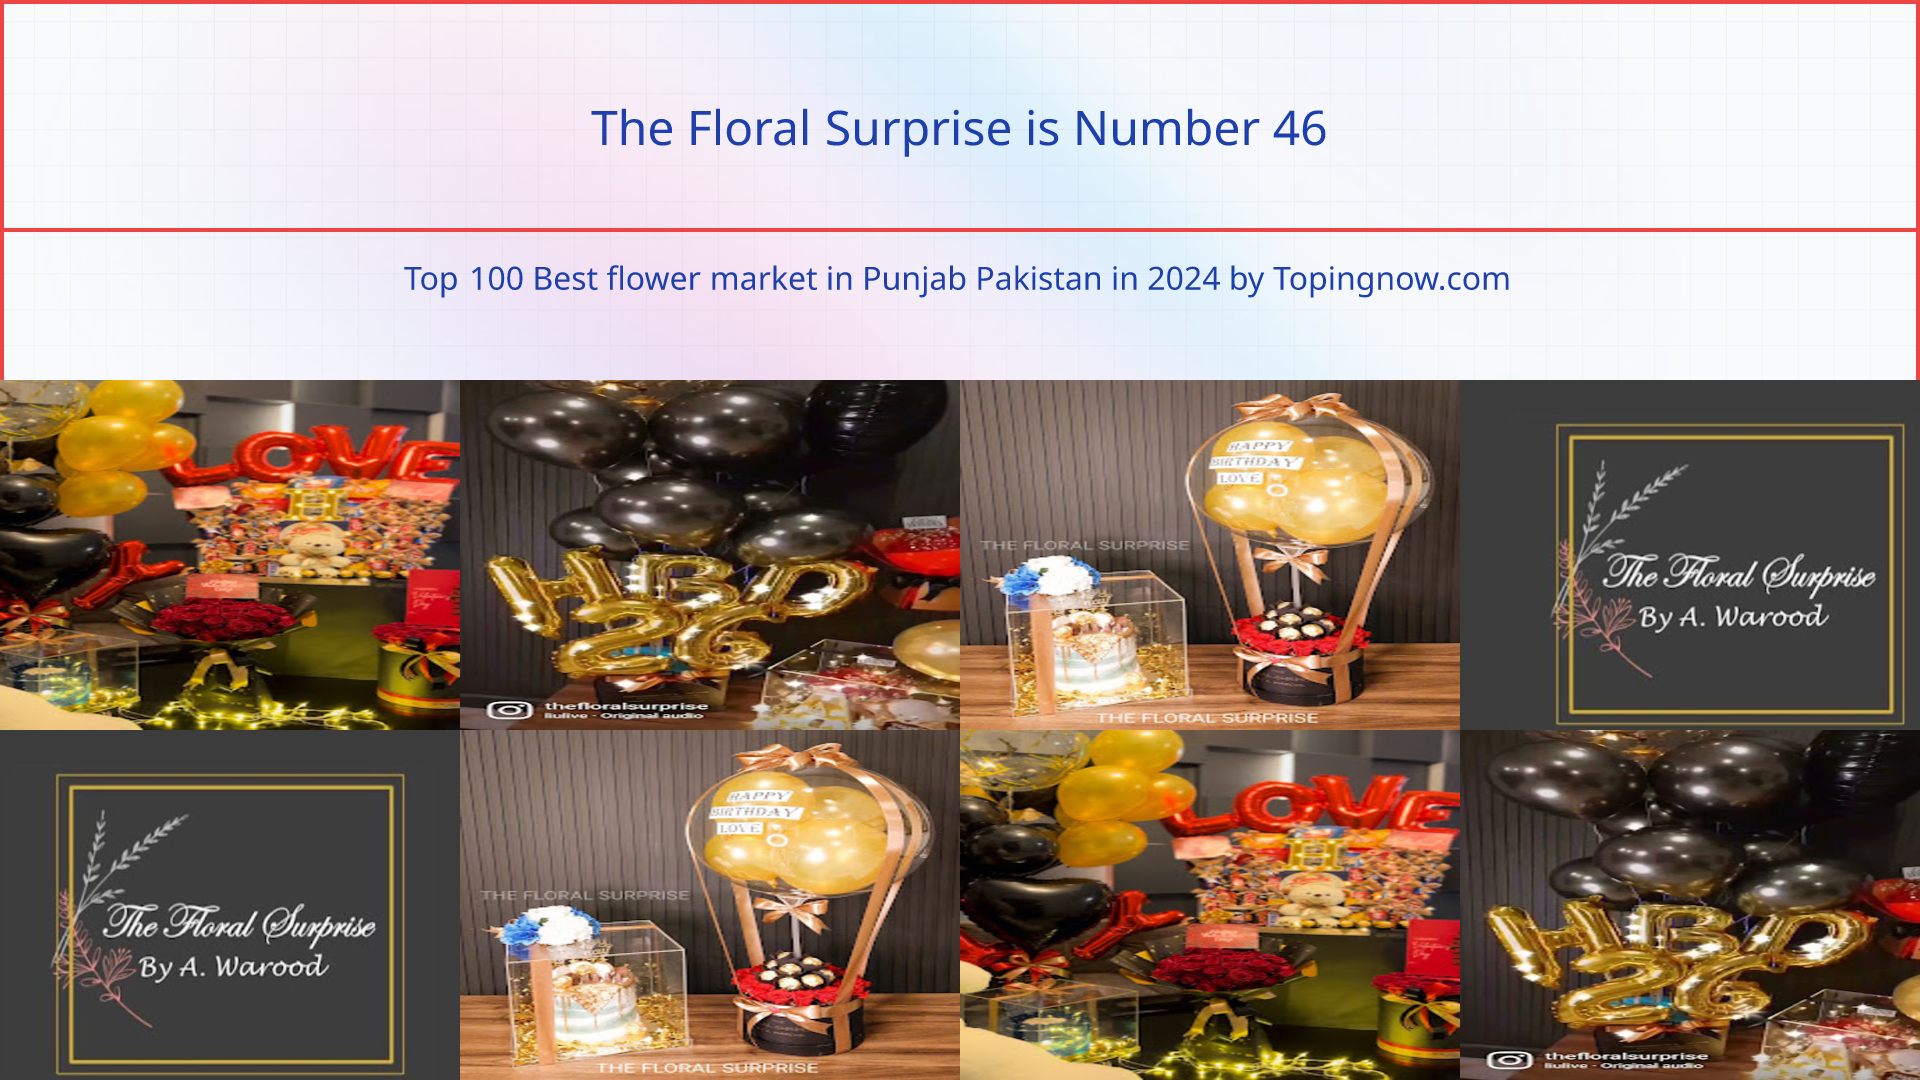 The Floral Surprise: Top 100 Best flower market in Punjab Pakistan in 2024